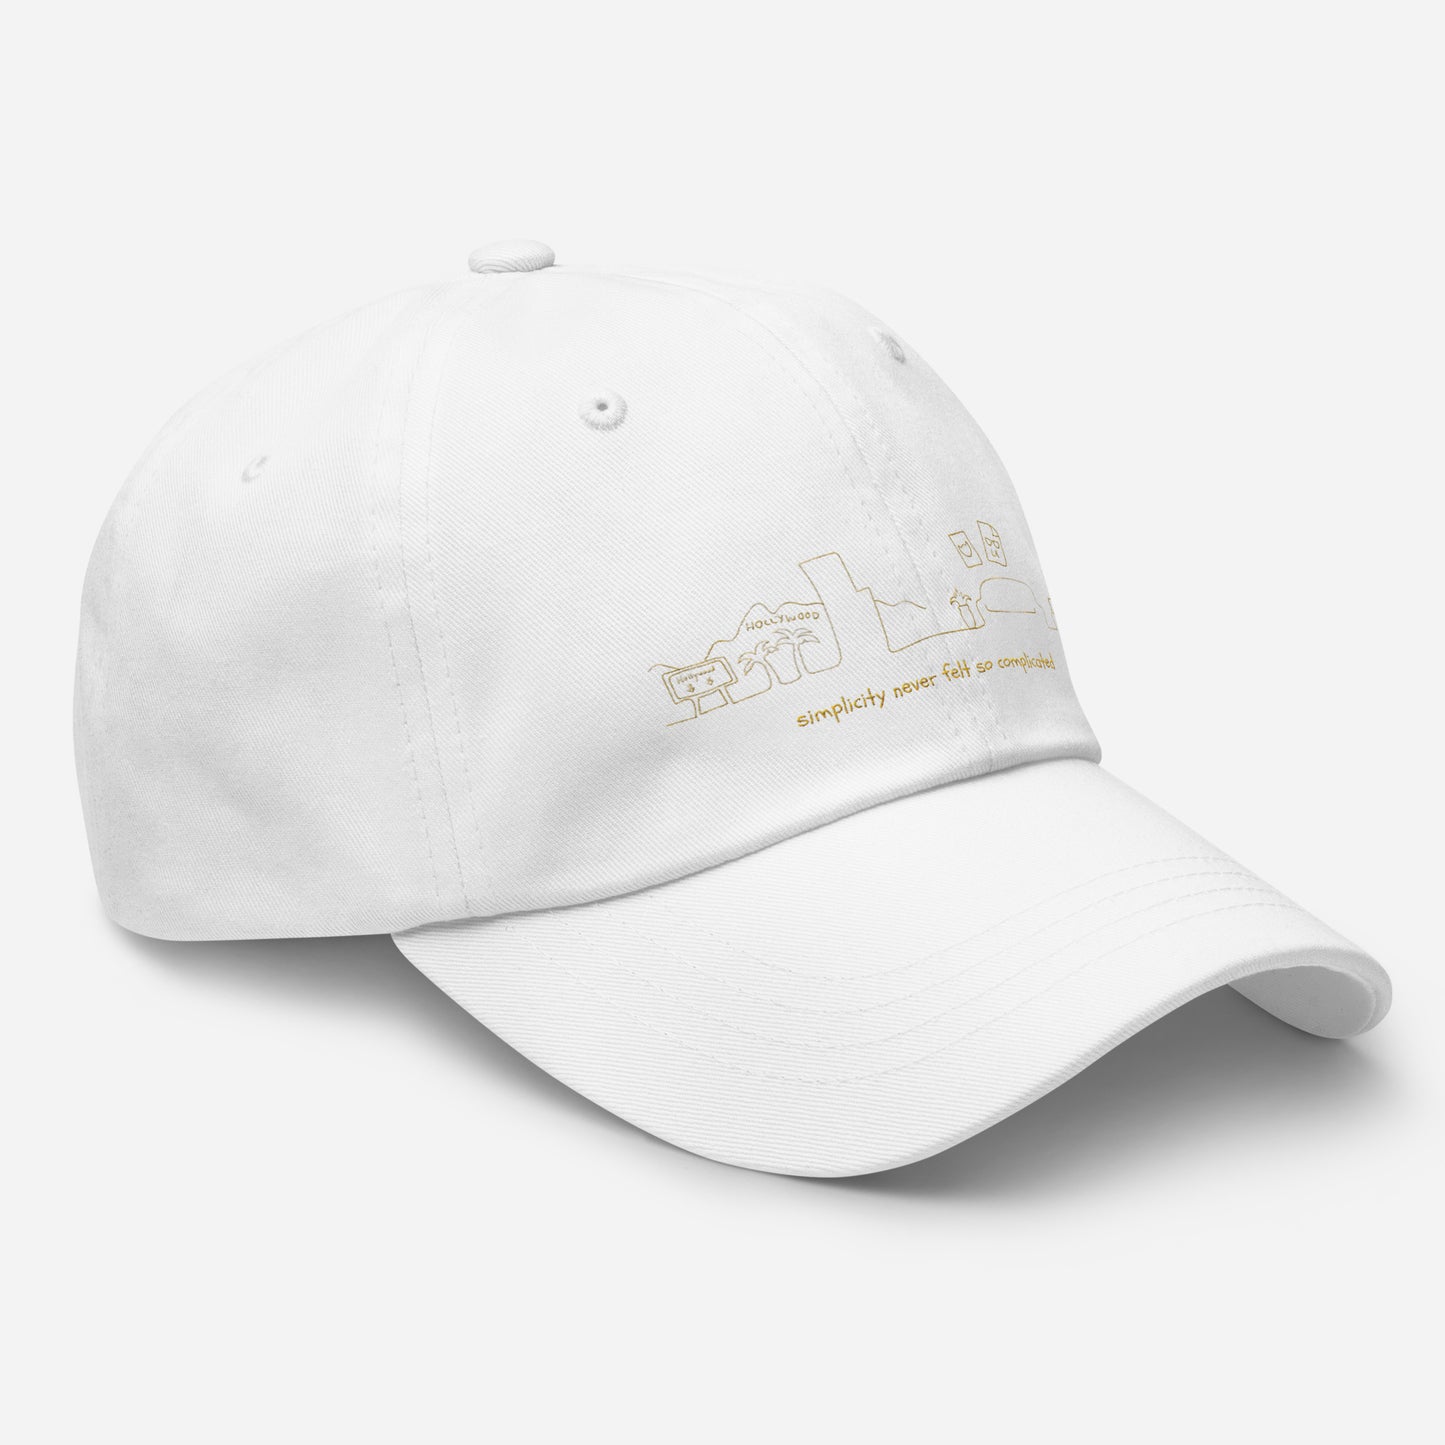 Simplicity hat